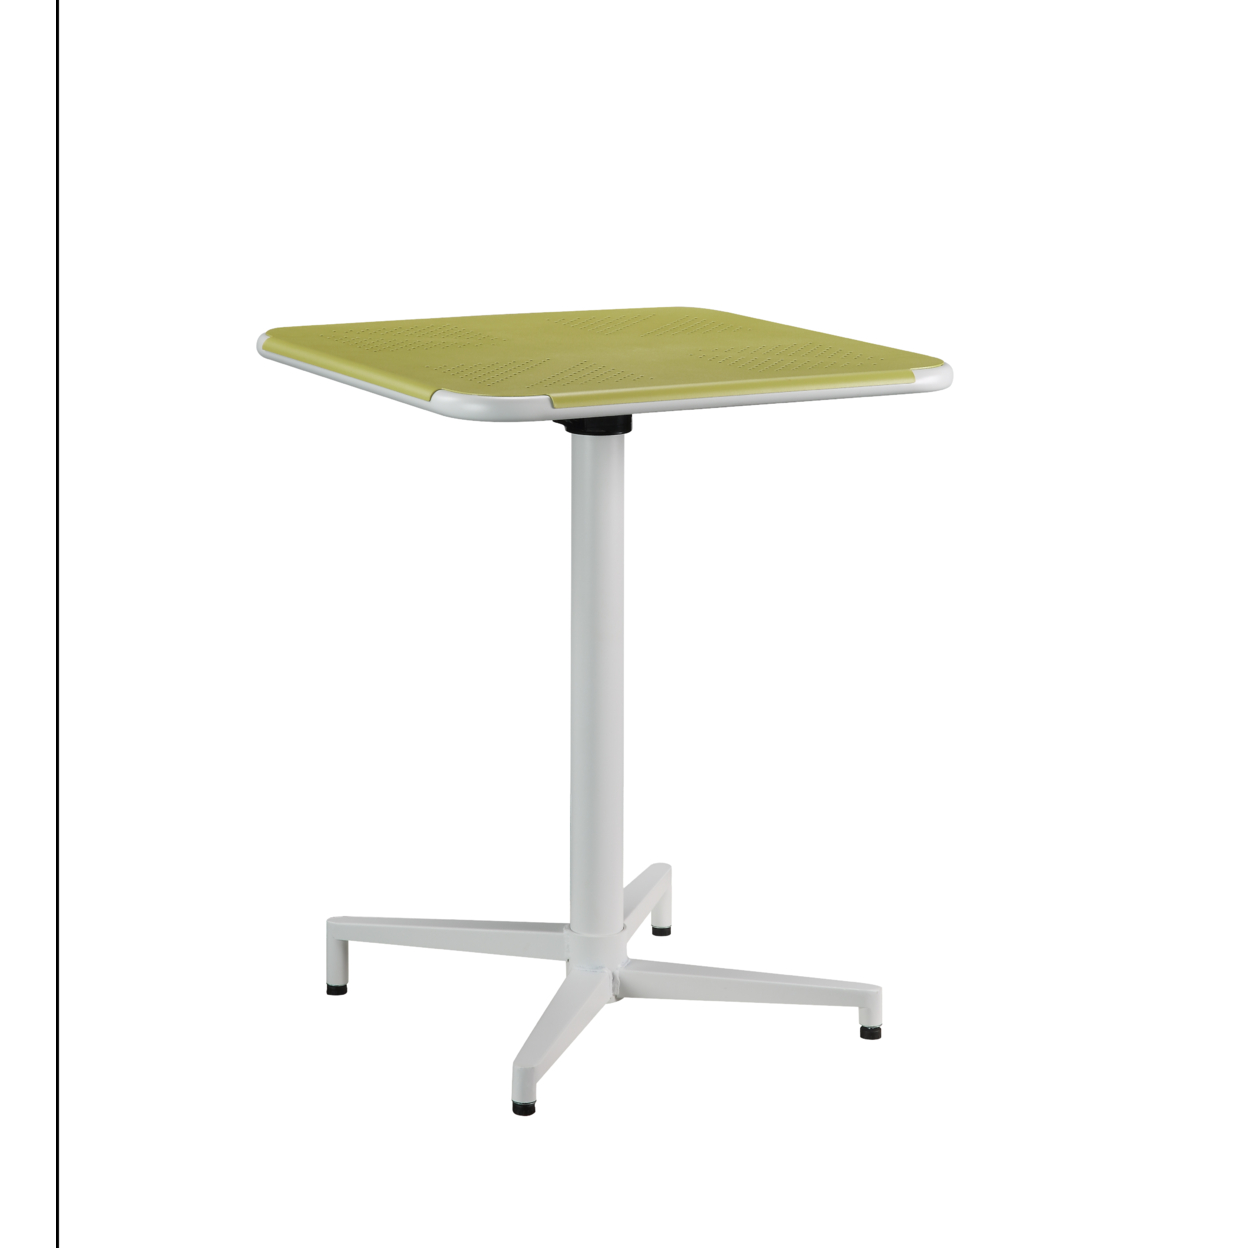 Dual Tone Metal Folding Table With 4 Star Pedestal Base, White And Yellow- Saltoro Sherpi